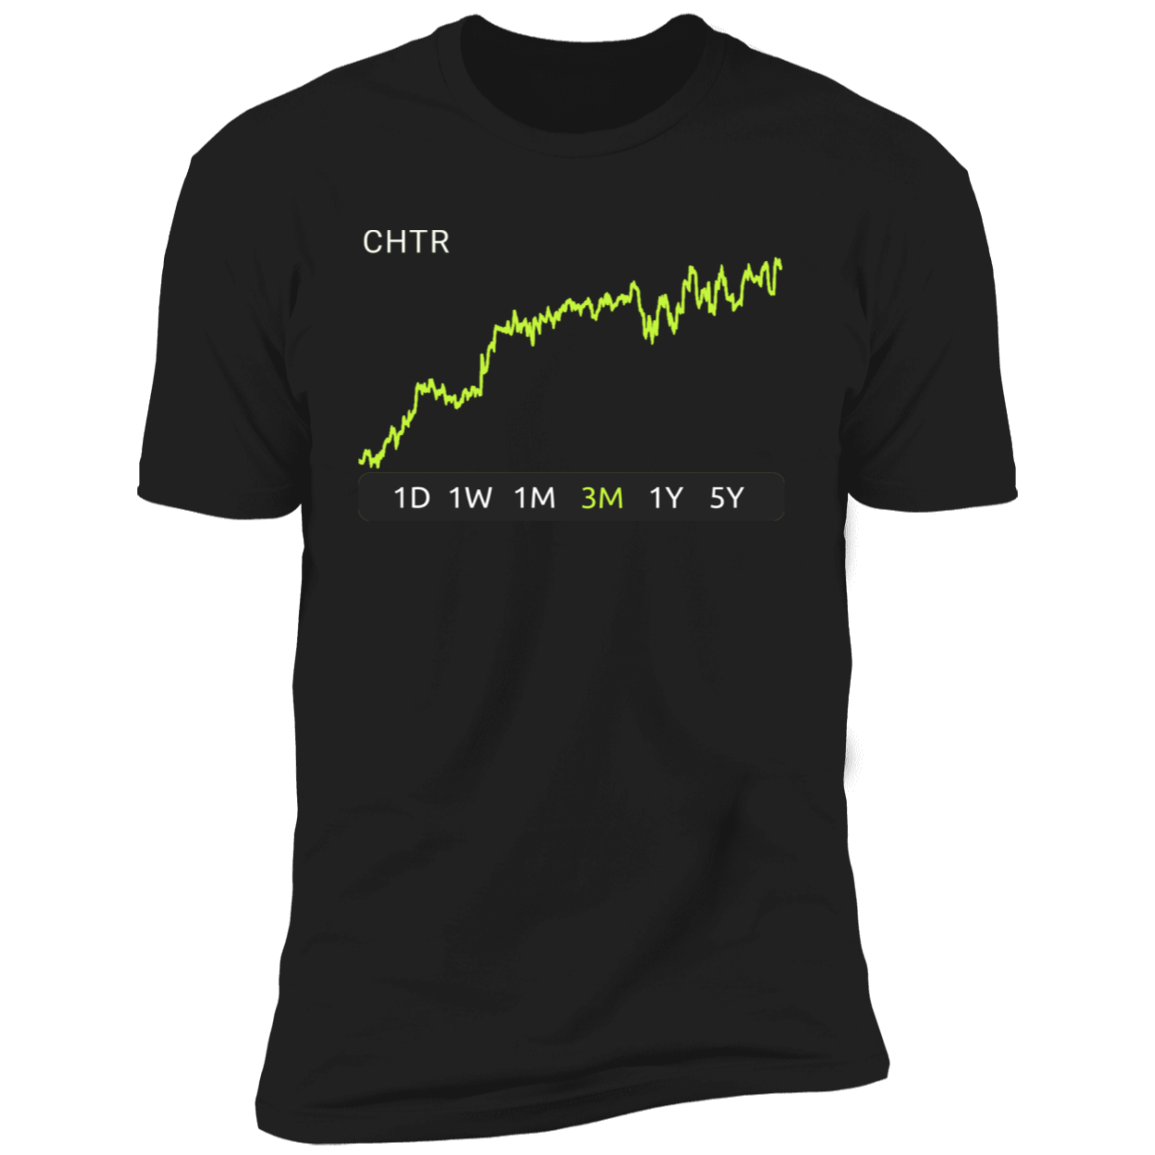 CHTR Stock 3m Premium T-Shirt